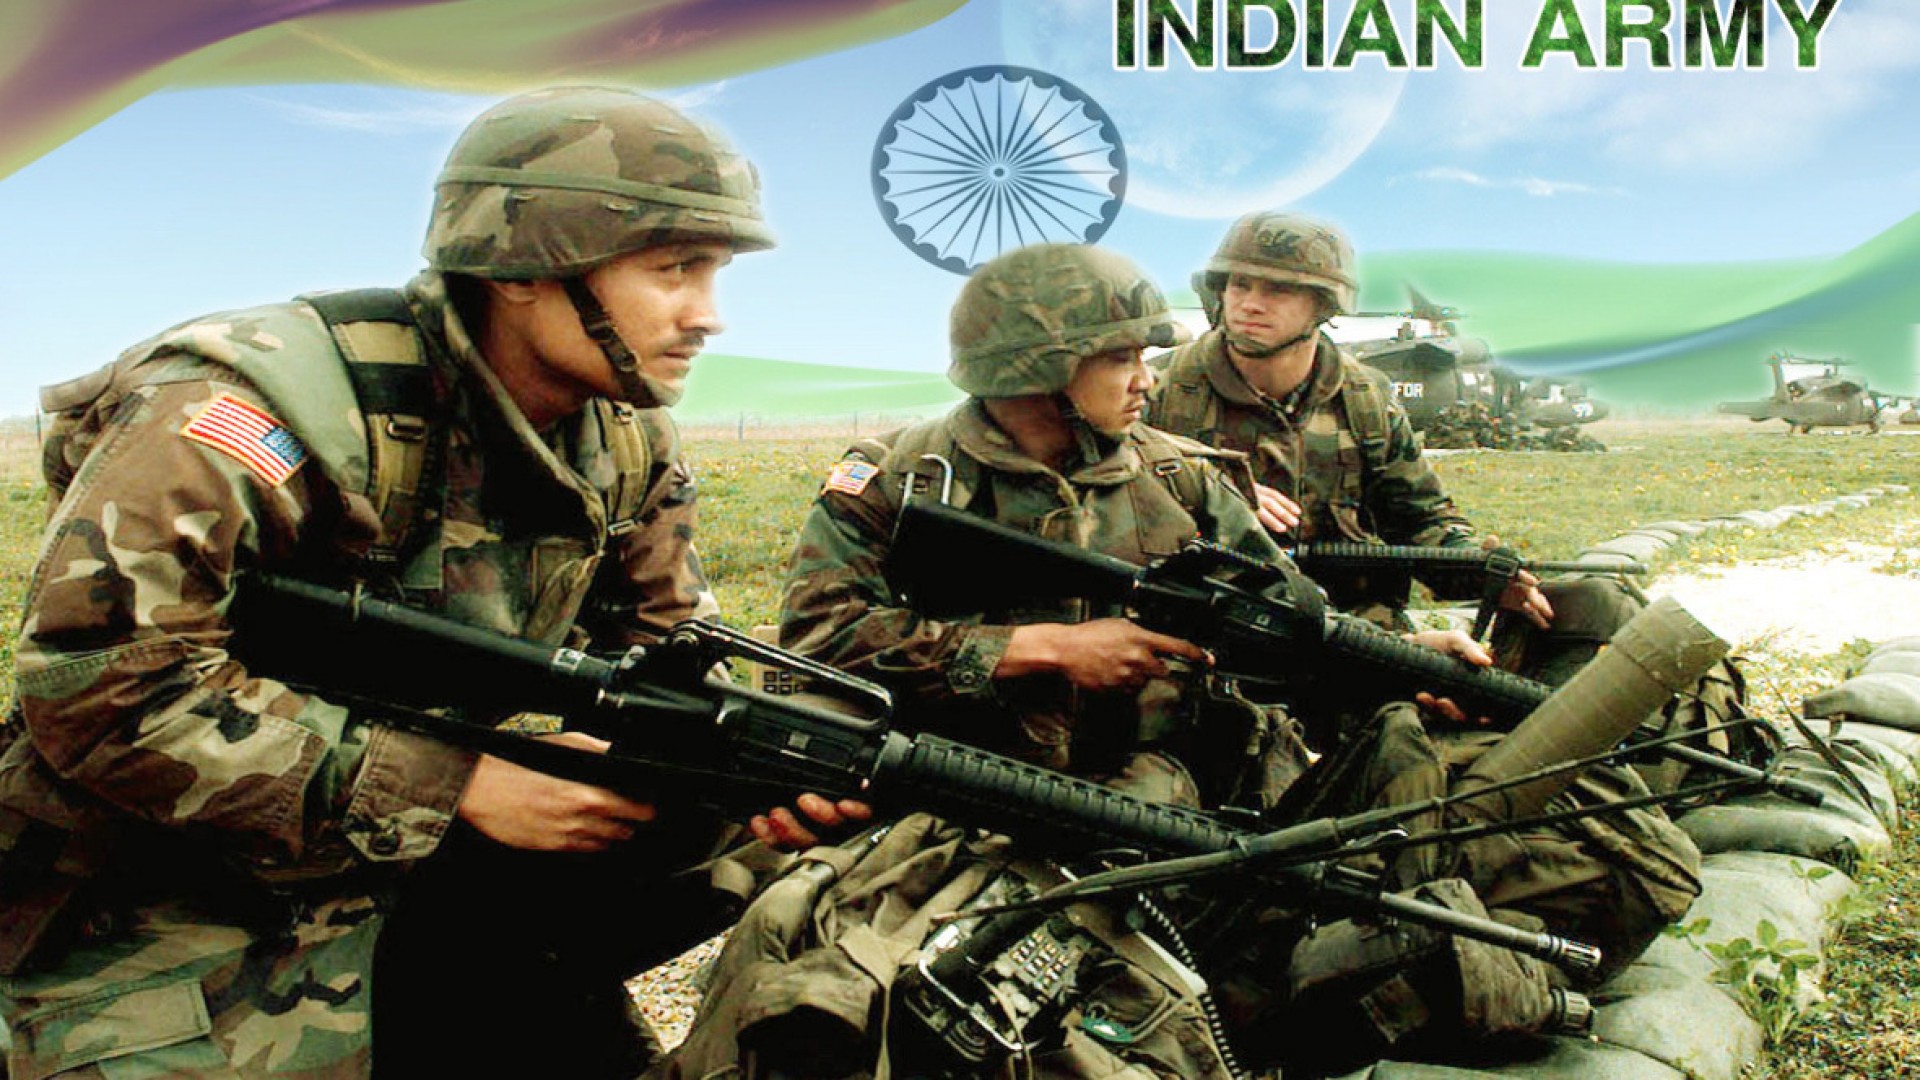 Indian army desktop hd wallpaper - HDWallpapersin.com | HD ...